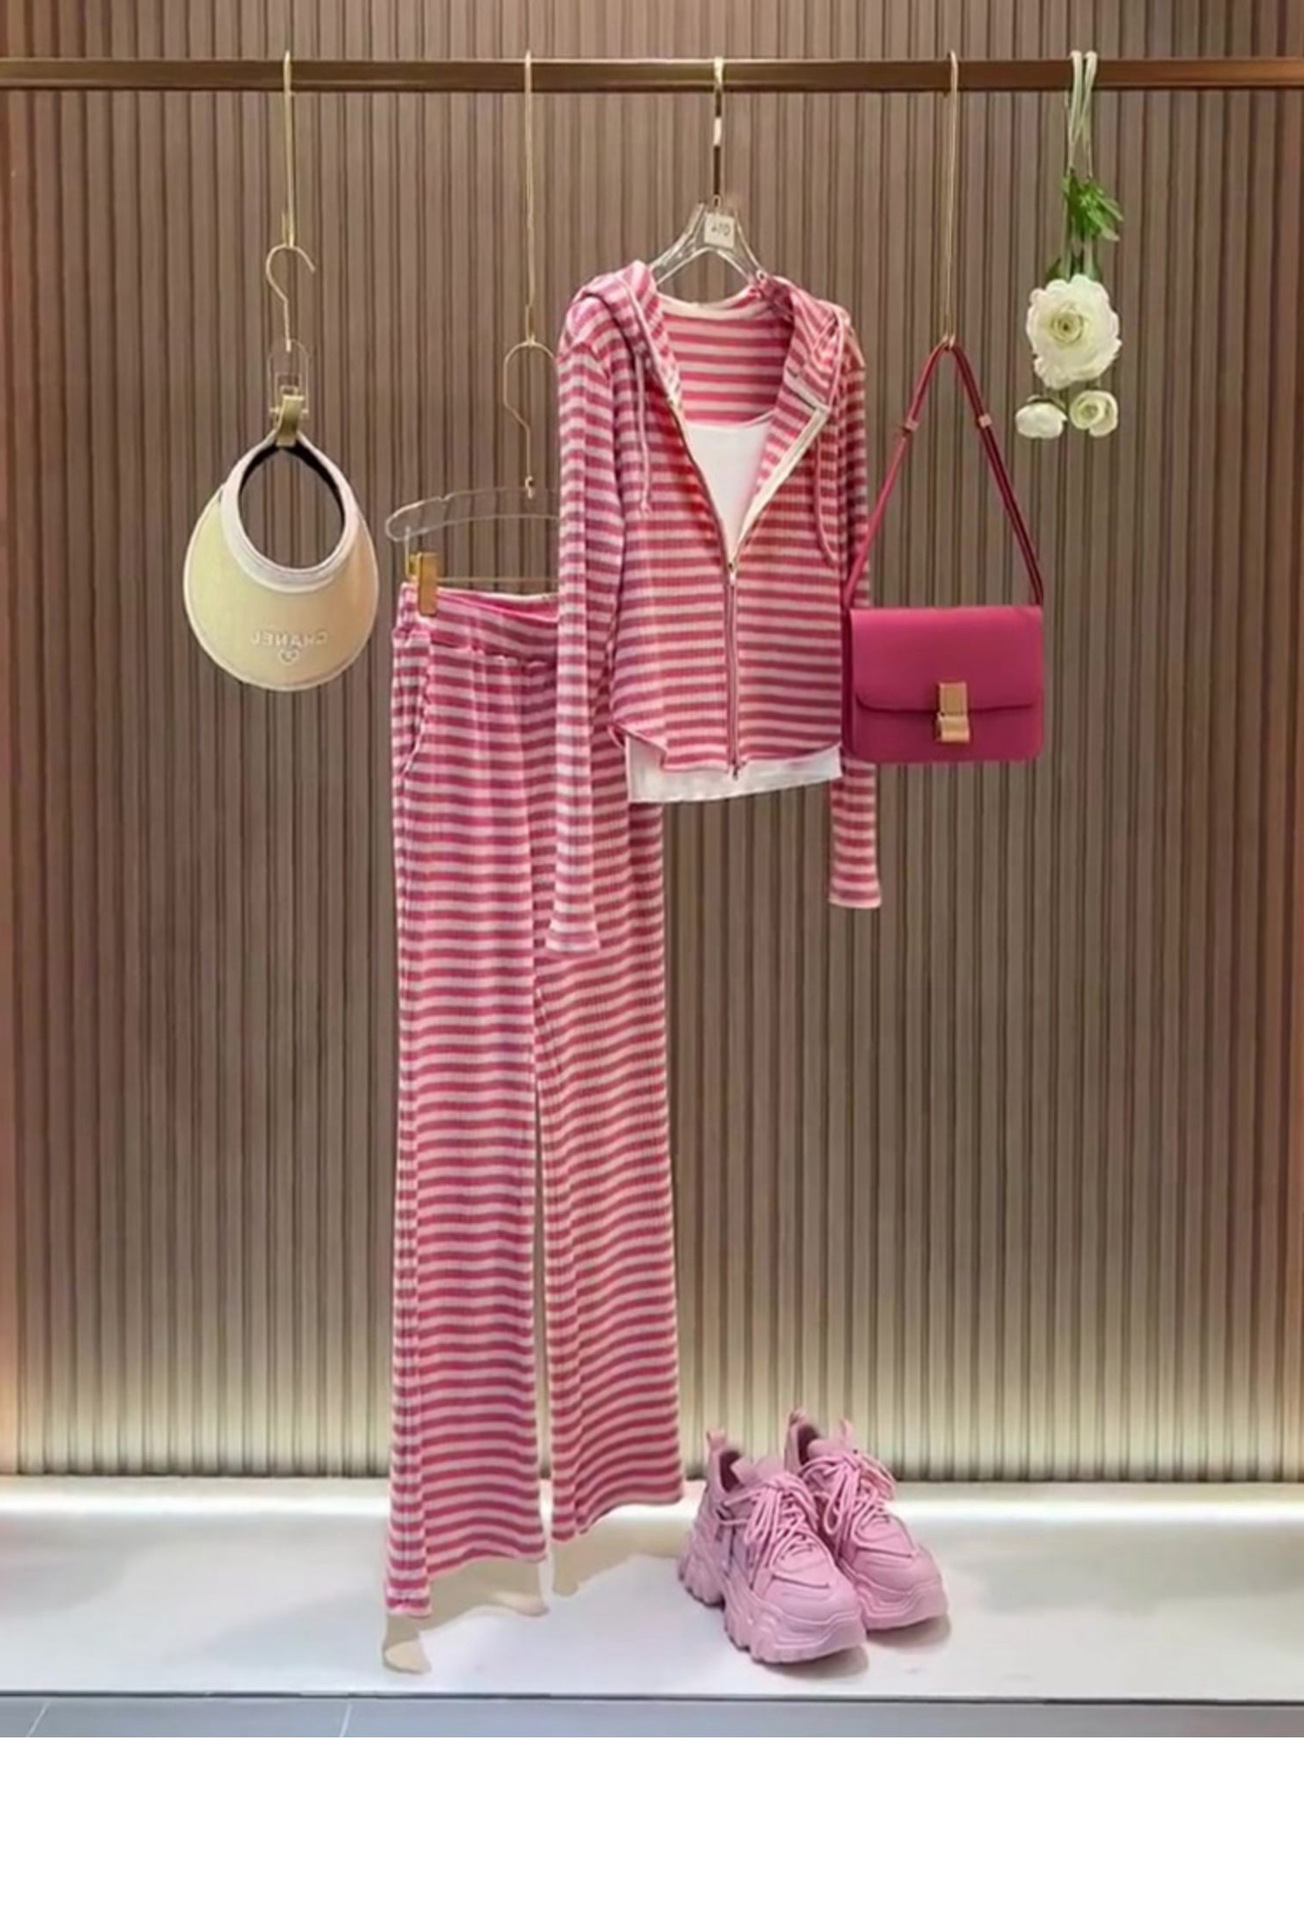 Salt Sweet Fried Street Sportswear College Style High-Grade Pink Striped Top Two-Piece Pants Women's Spring